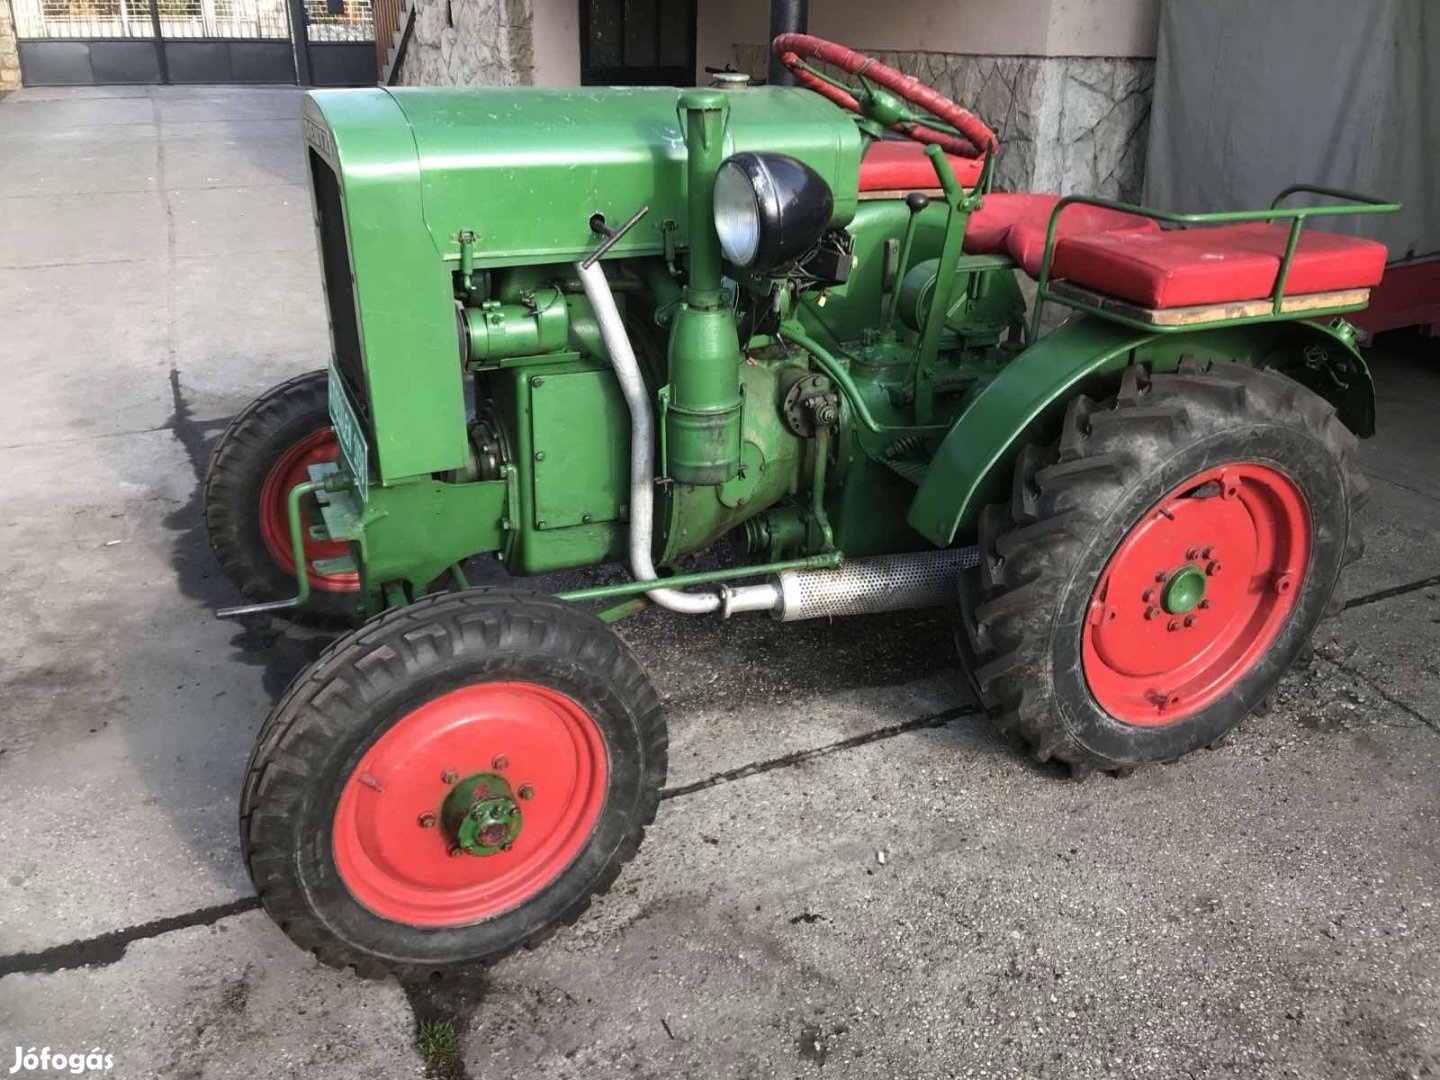 Deutz traktor 1938-as évjárat (f1m414)